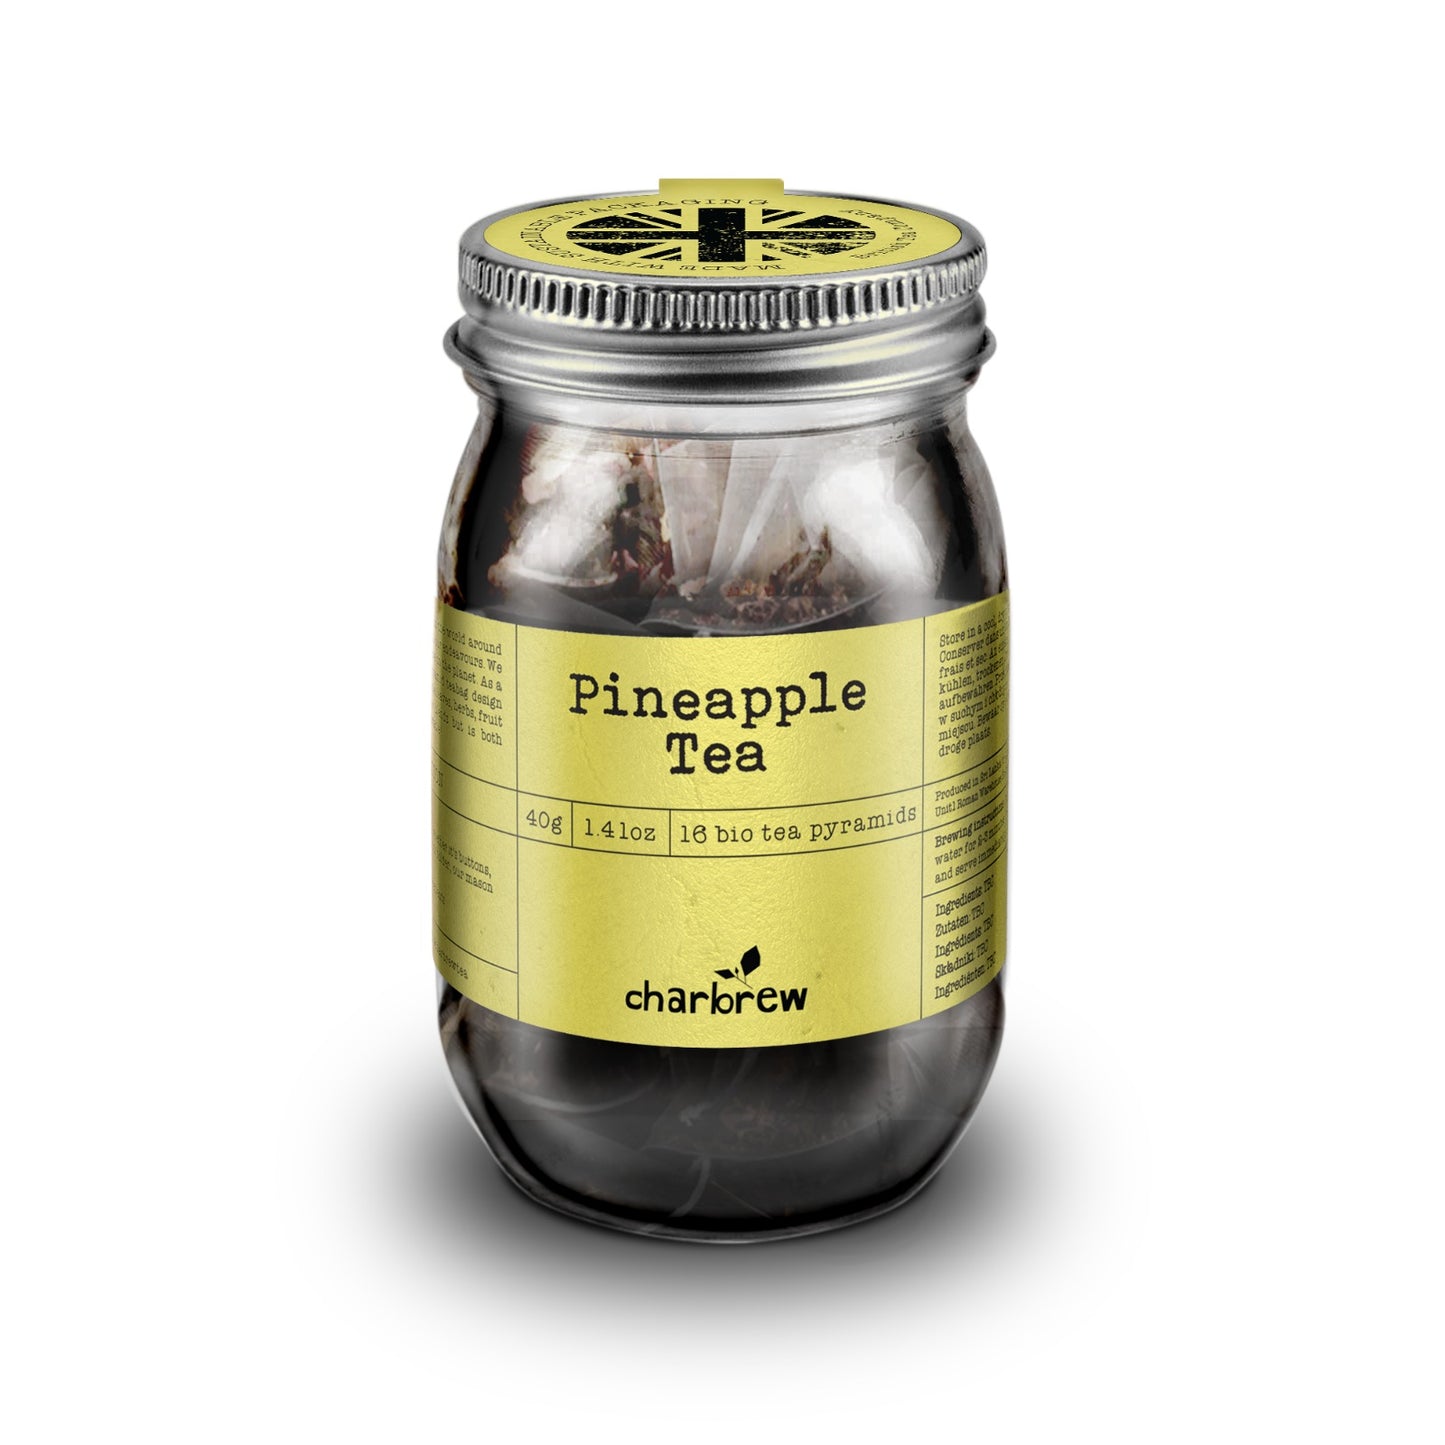 Pineapple Tea Bags Mason Jar - 16 Biodegradable Pyramid Bags